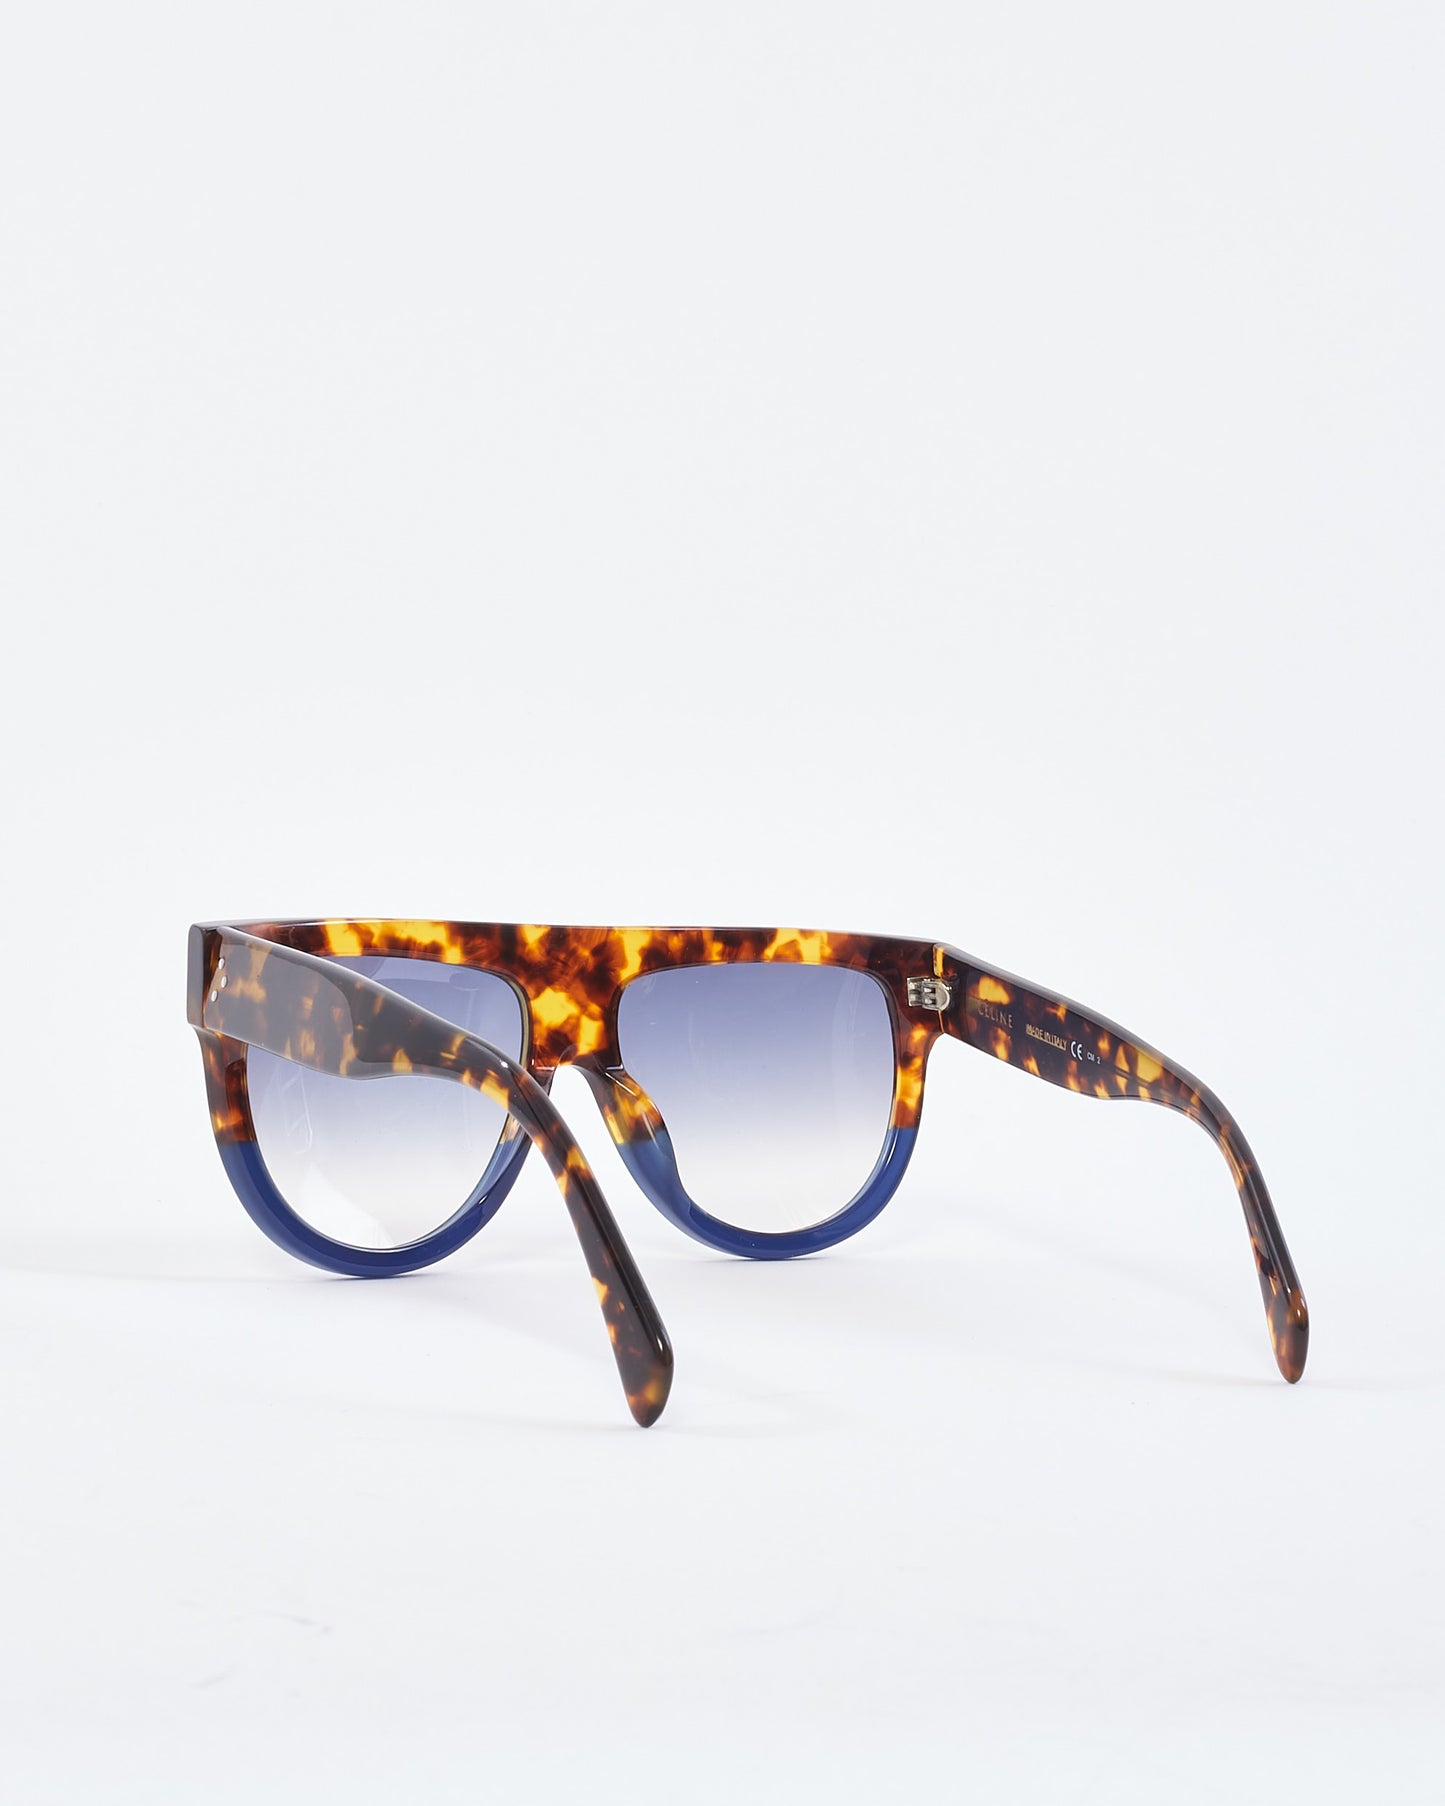 Celine Tortoise/Navy Flat Top CL 41026/S Sunglasses